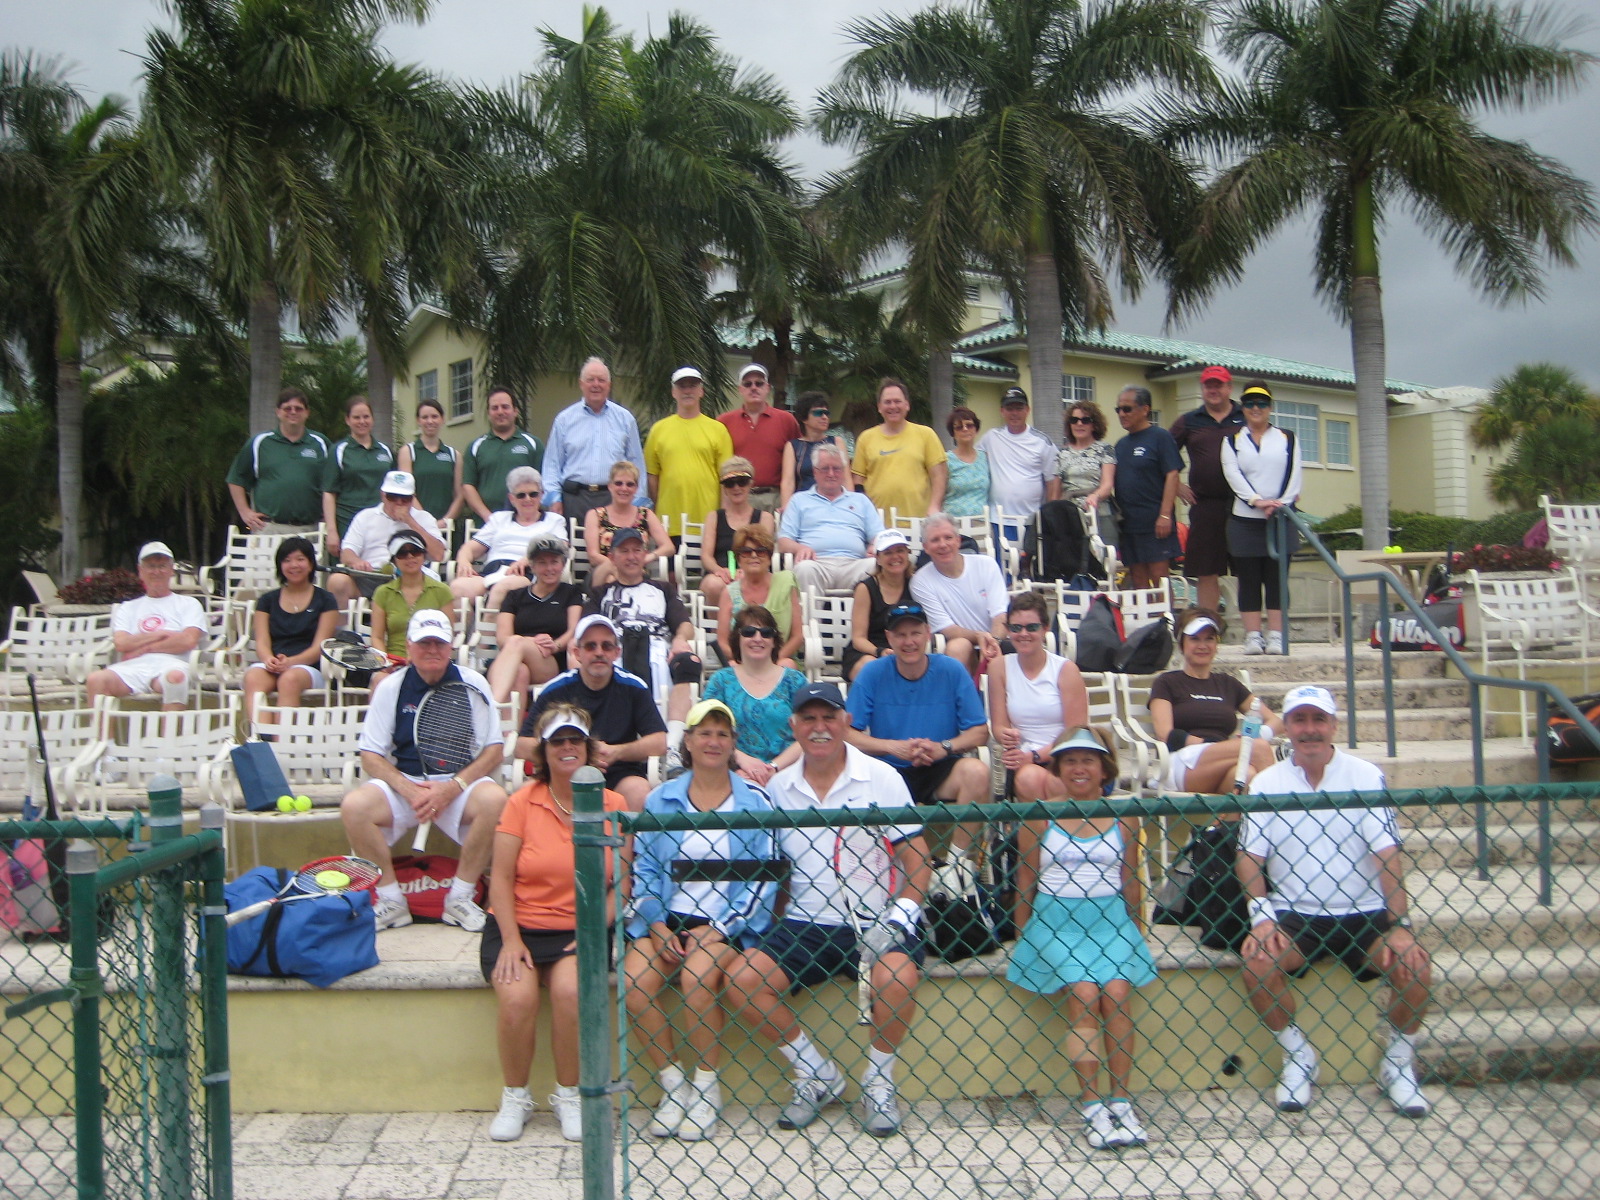 Tennis Cruise participants